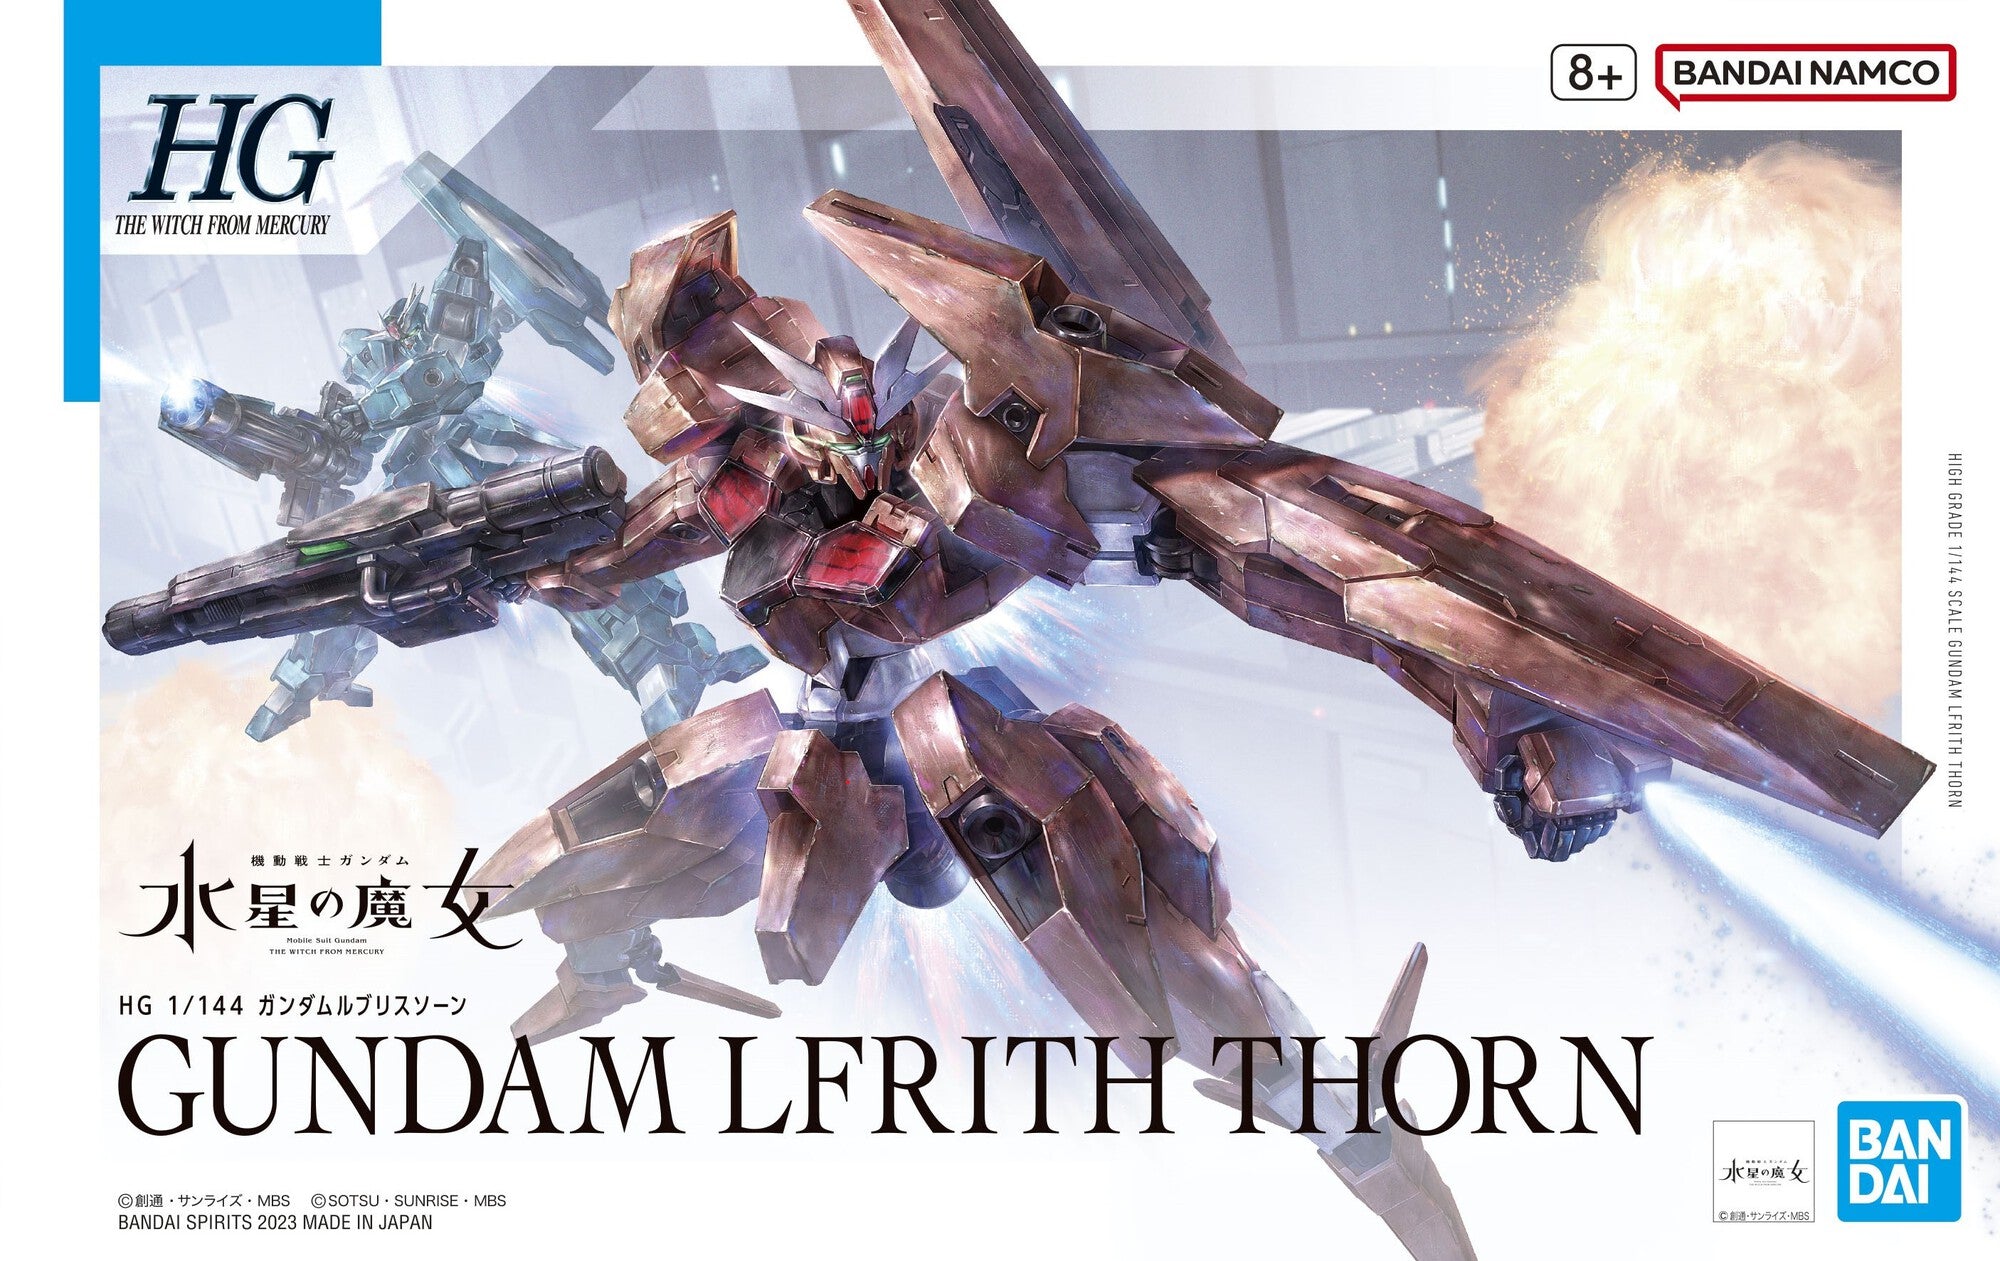 HGTWFM - EDM-GA-02 Gundam Lfrith Thorn